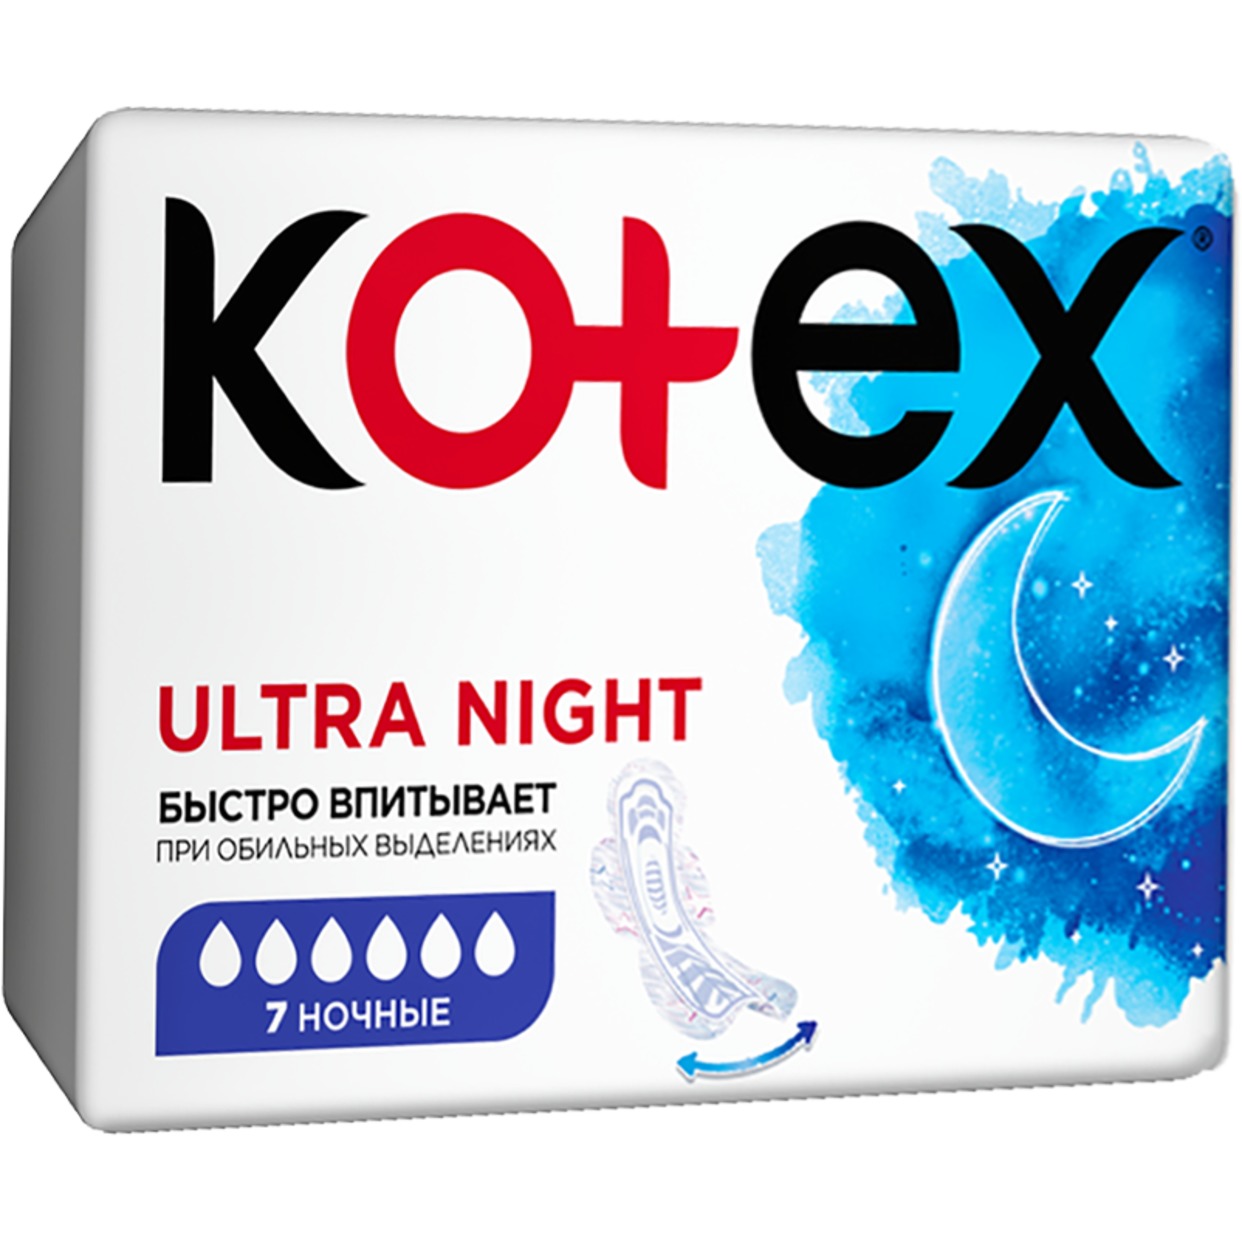 Прокладки Kotex Ultra Night ночные 7 шт.